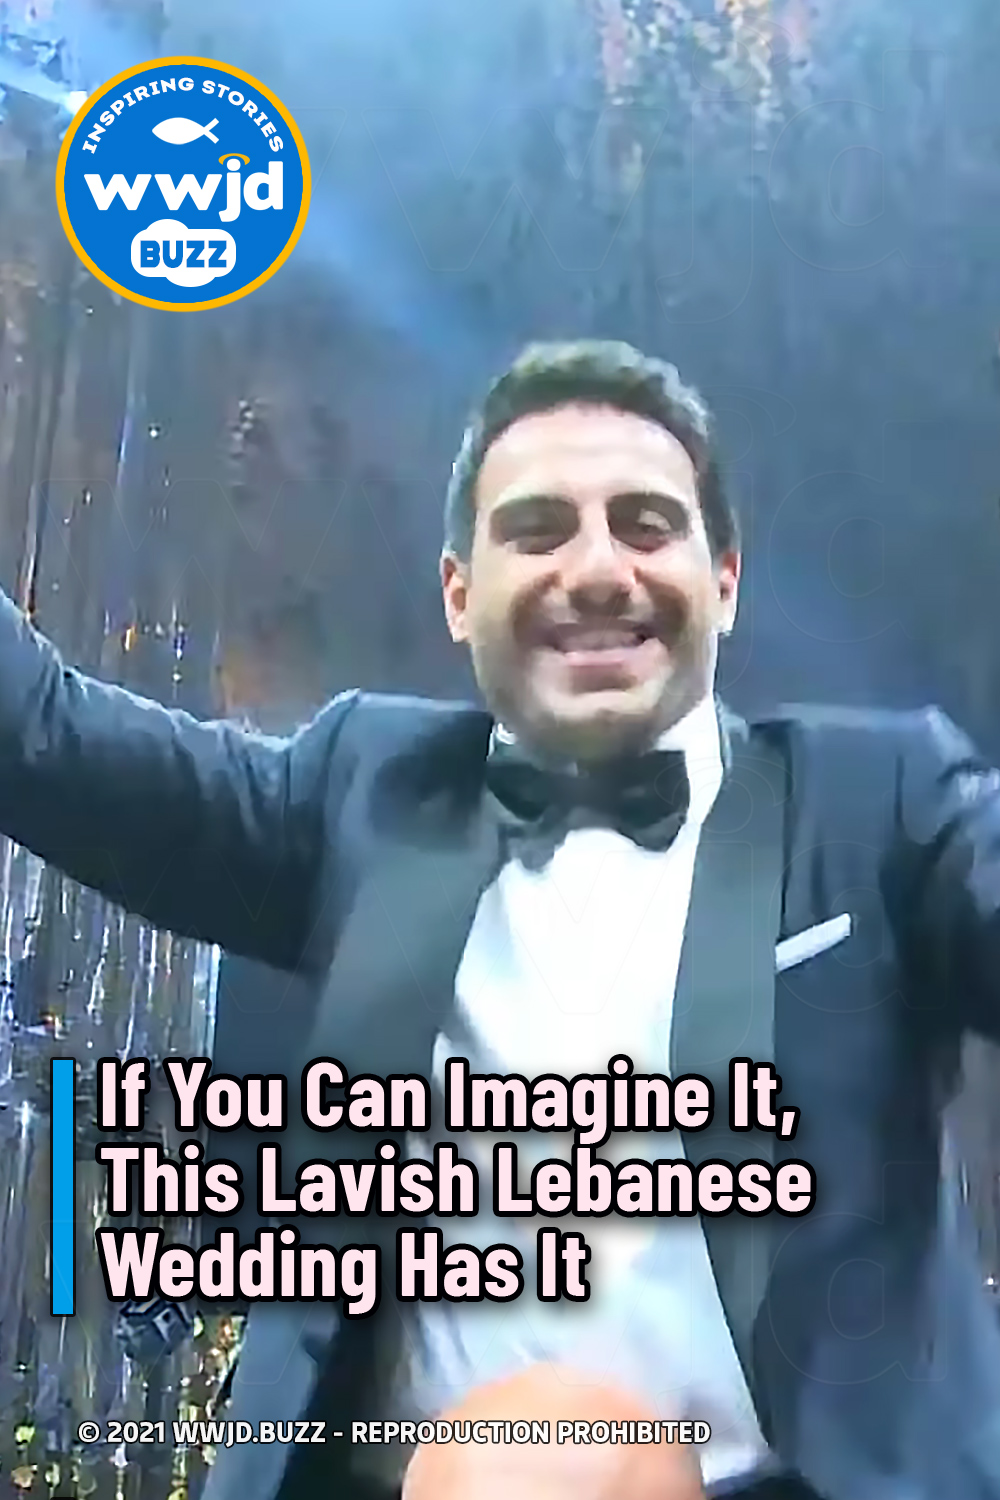 If You Can Imagine It, This Lavish Lebanese Wedding Has It